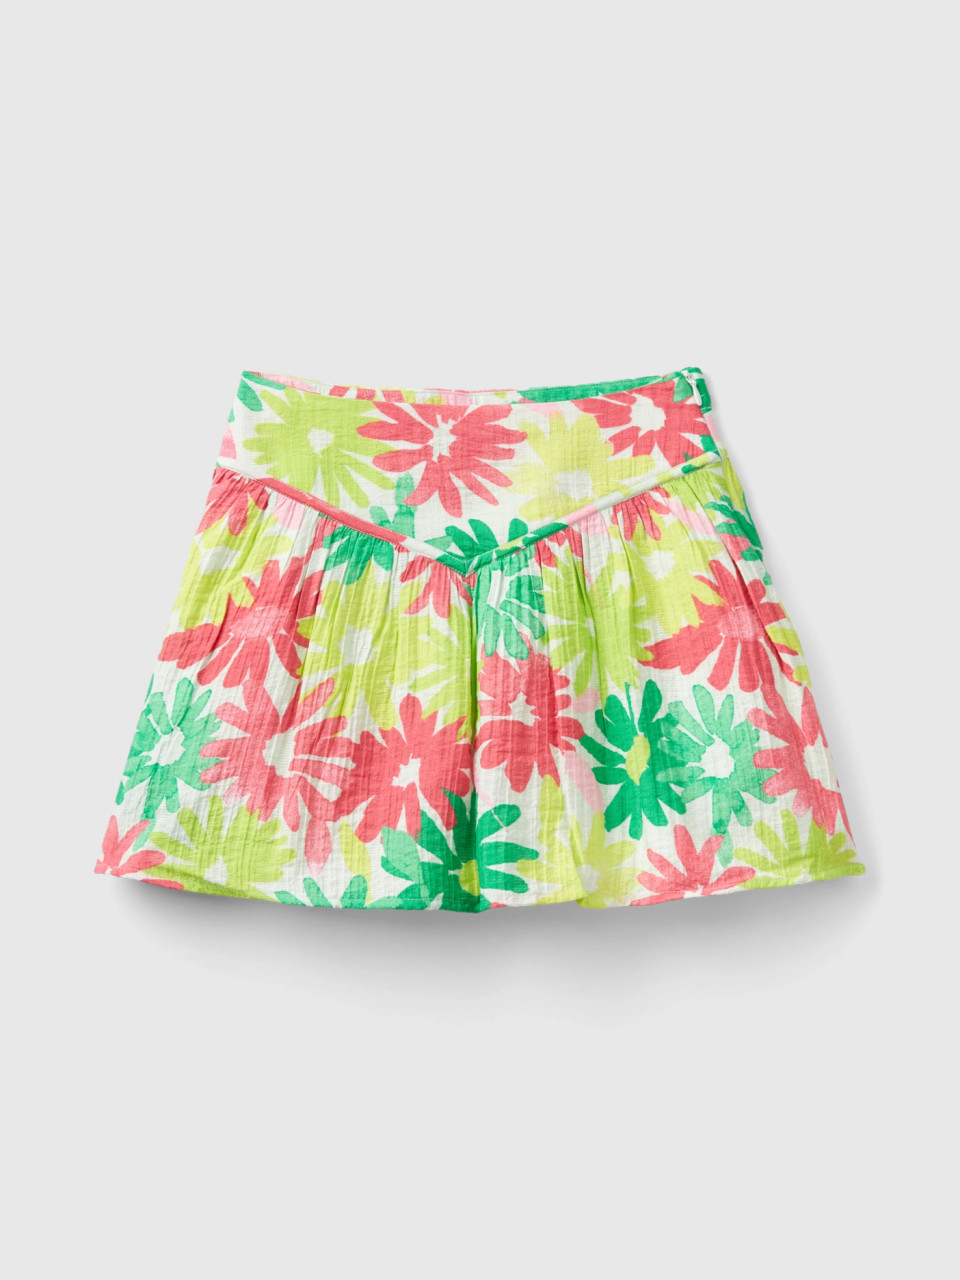 Benetton, Flowy Floral Skirt, Multi-color, Kids